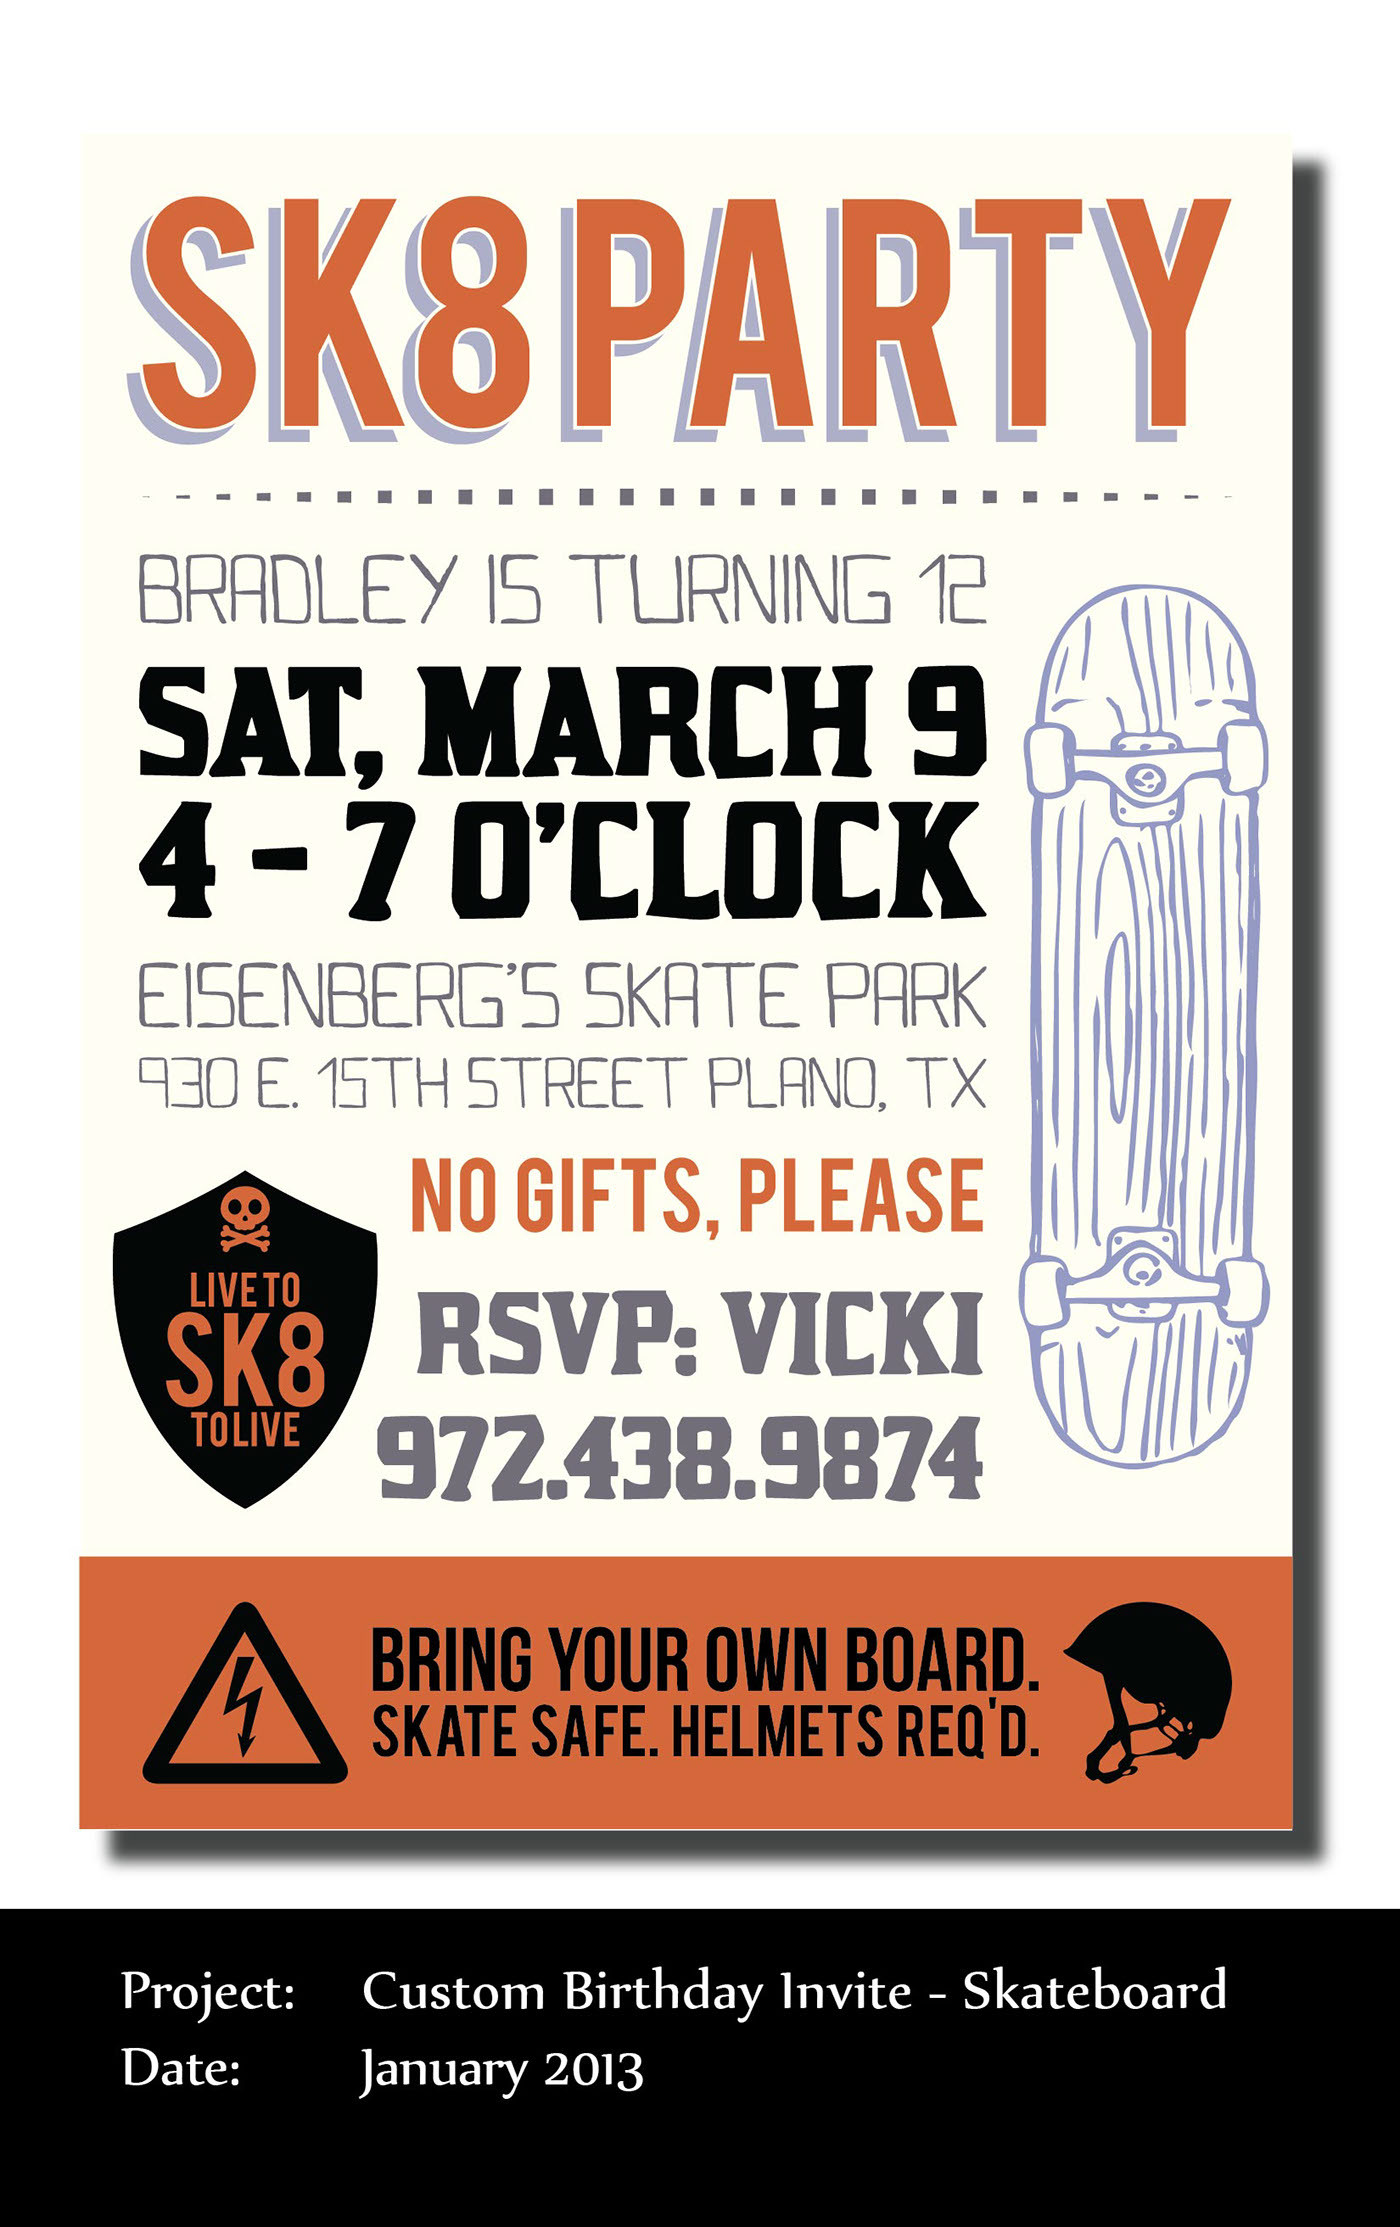 Skateboard Birthday Party
 Skateboard Themed Birthday Party Invite on Behance